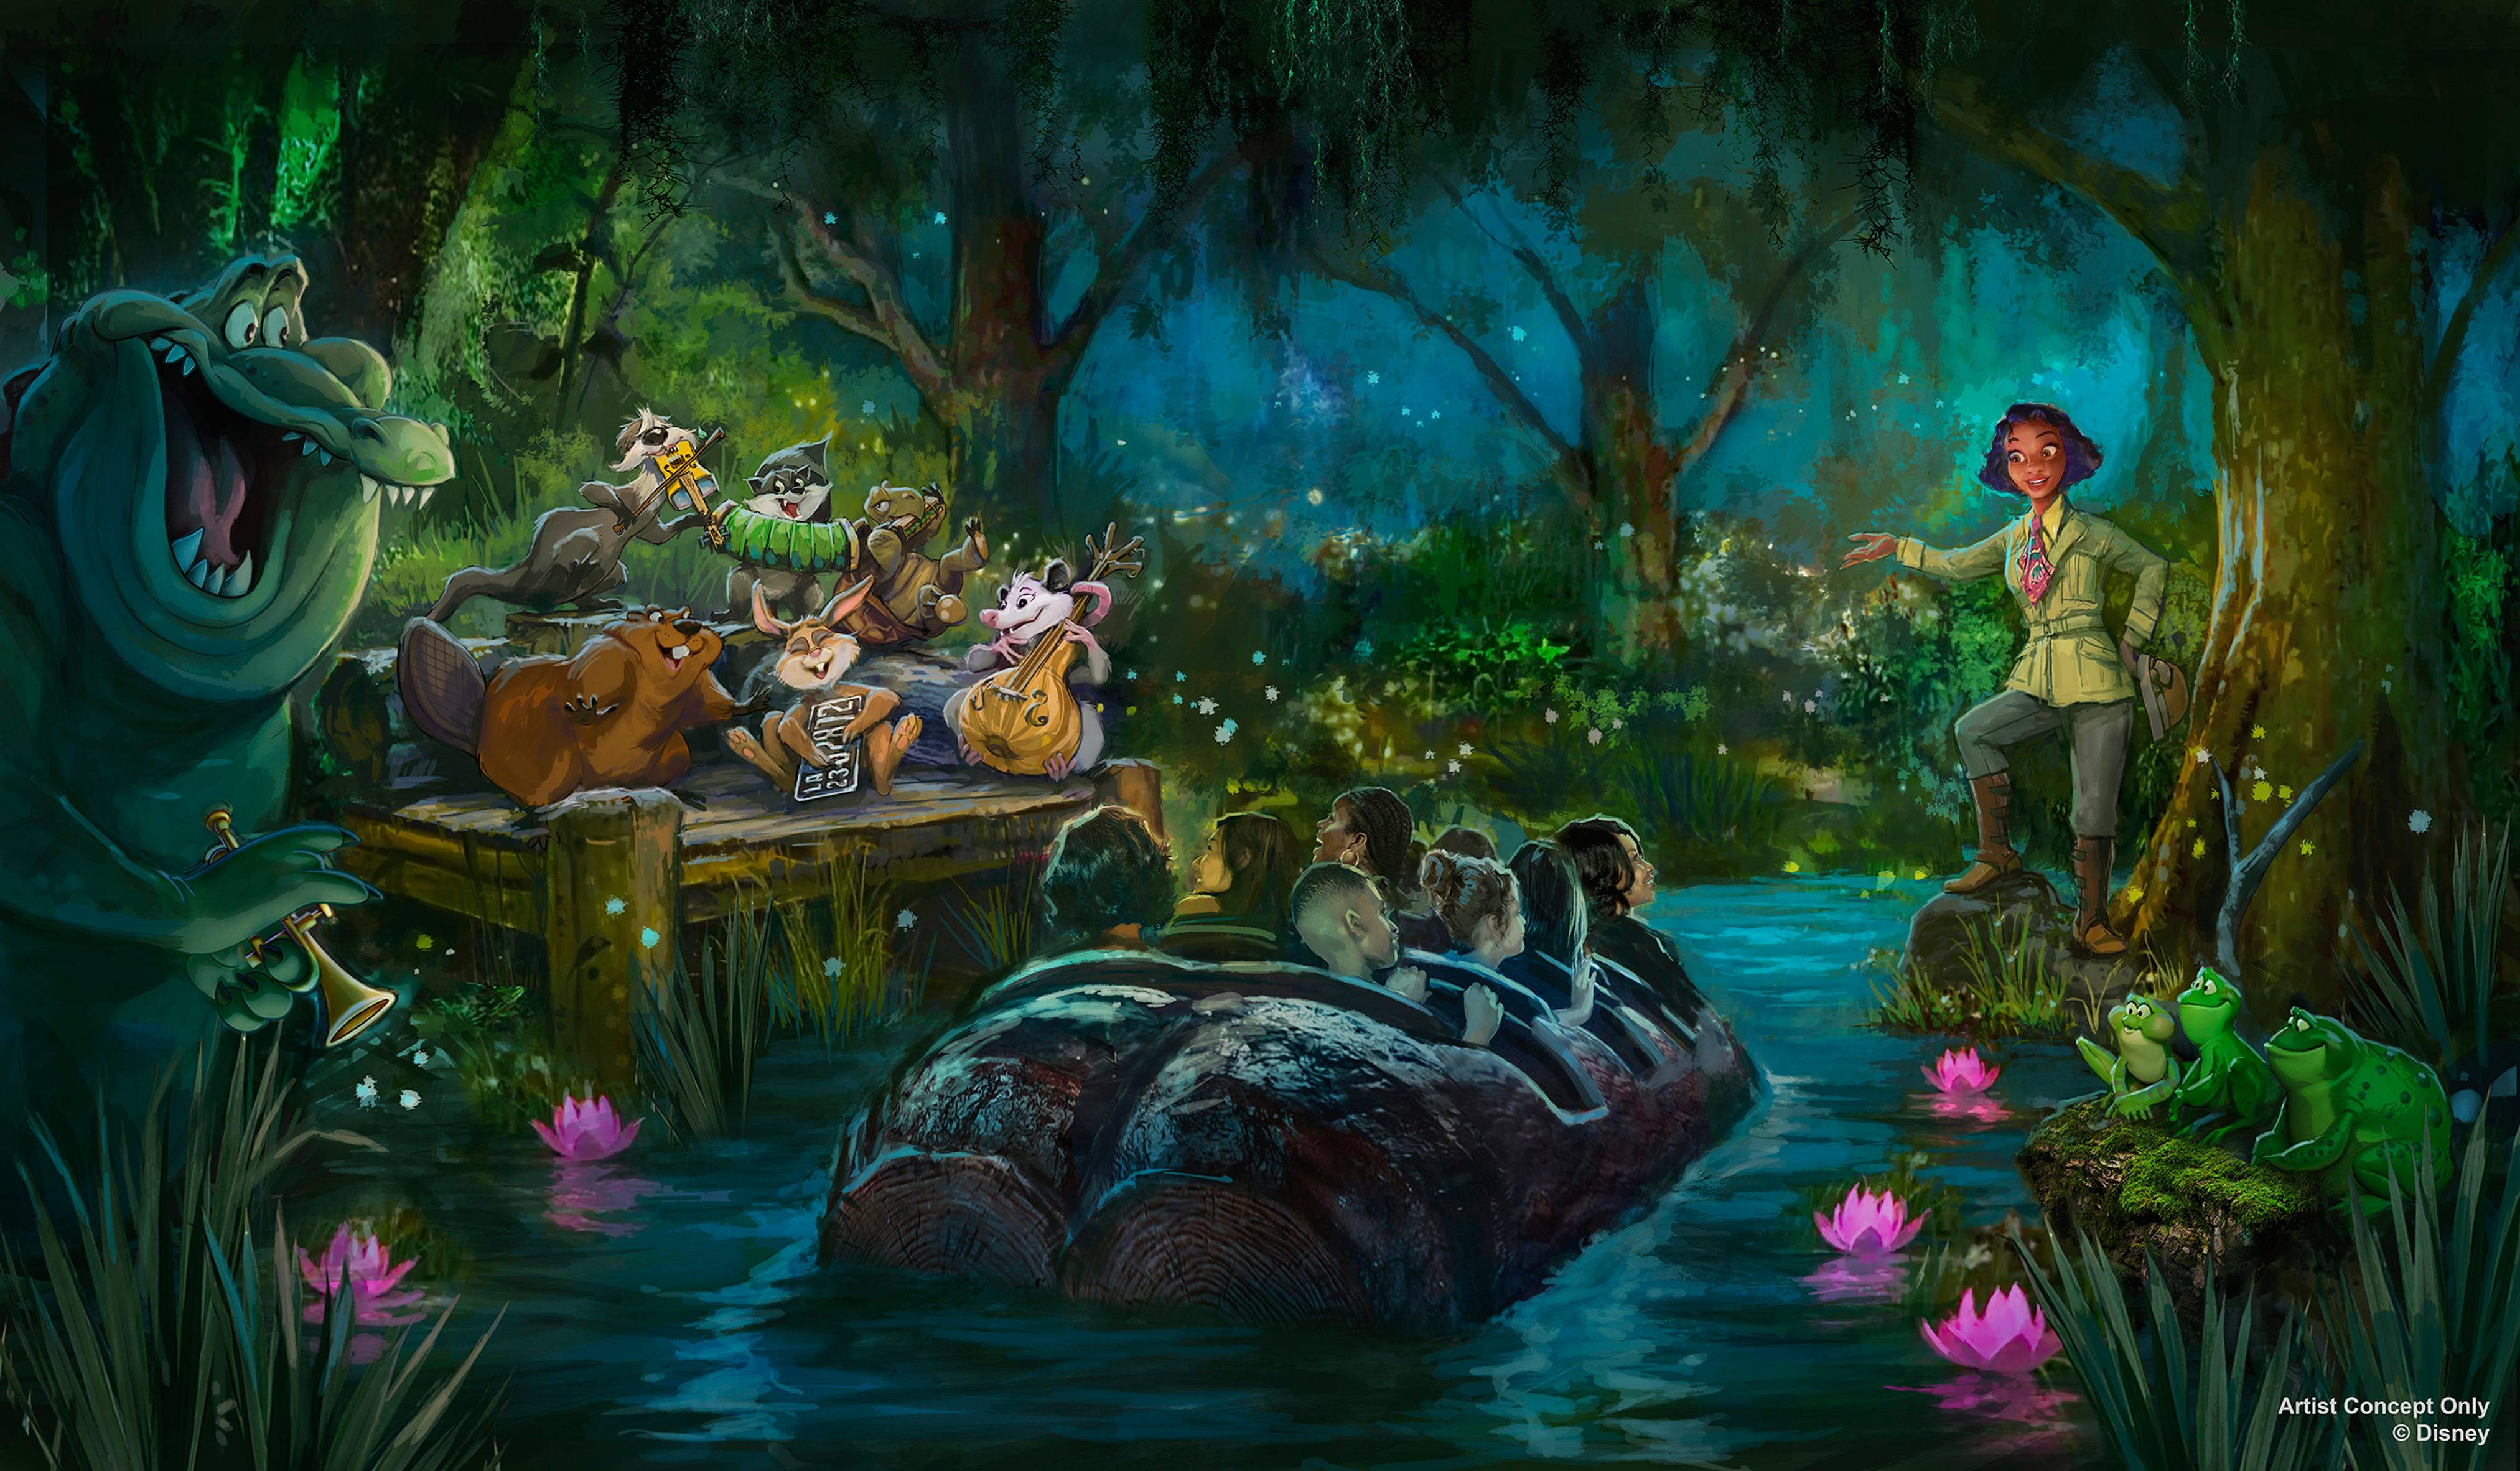 Magical Disney Artwork Showcases Beloved Characters - Inside the Magic